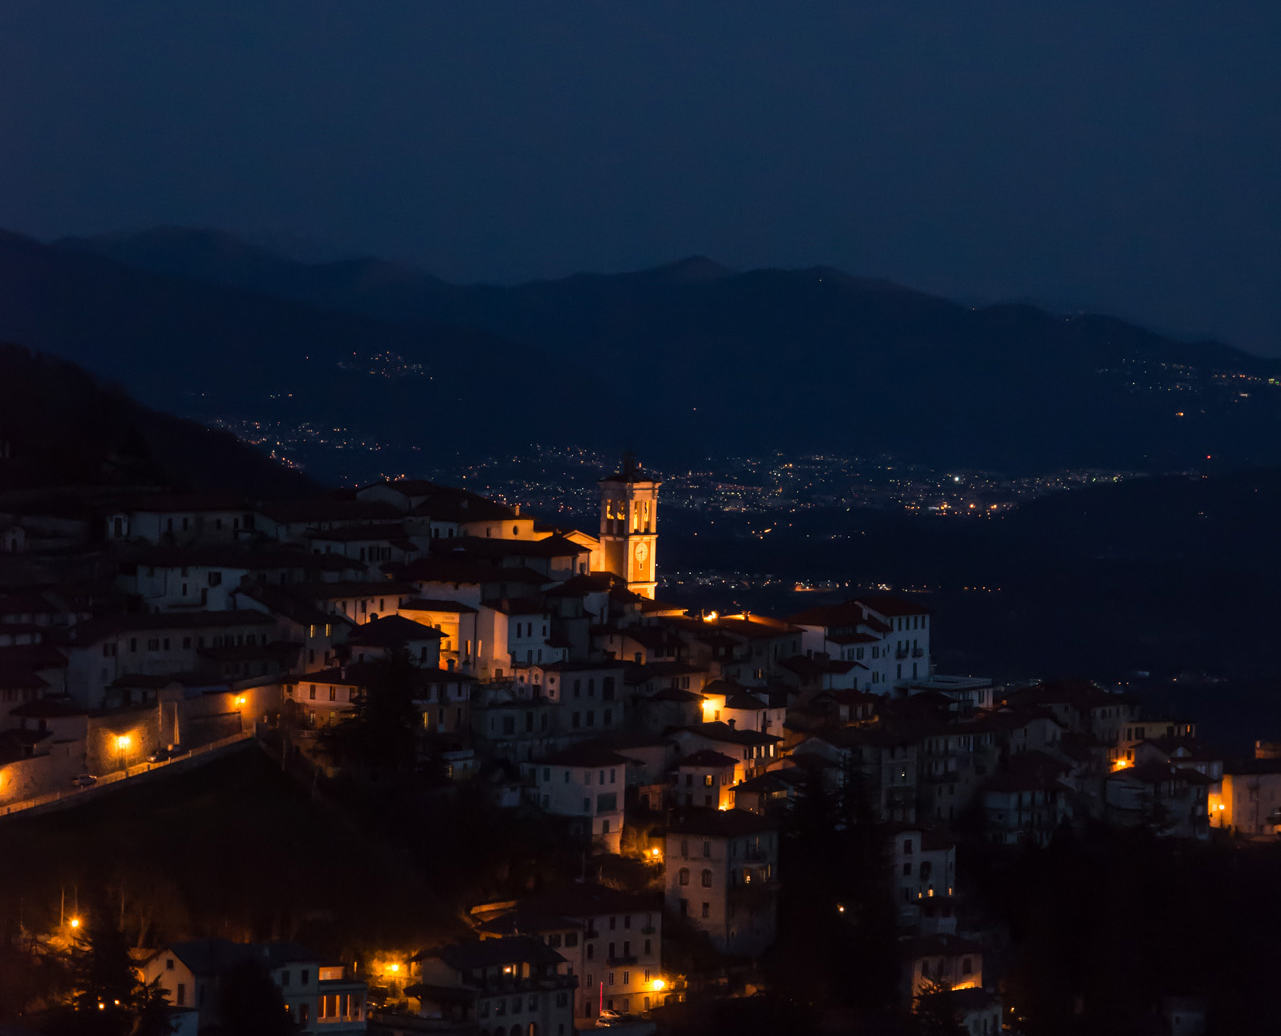 Visita guidata speciale: salita al calar della sera al Sacro Monte di Varese